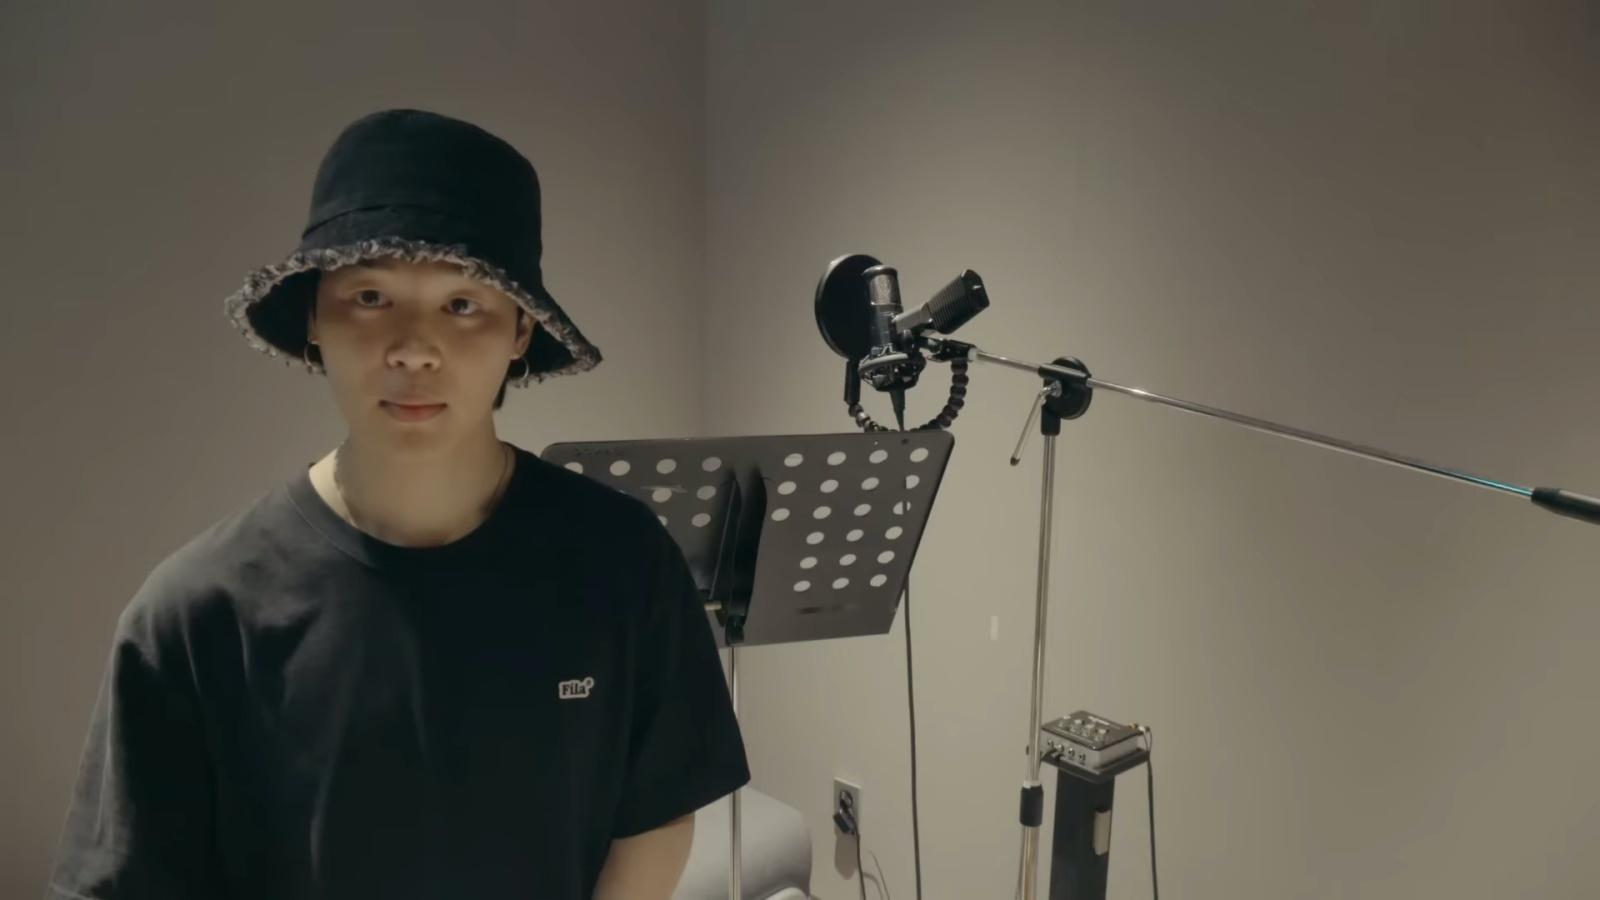 BTS' Jimin recording in a studio